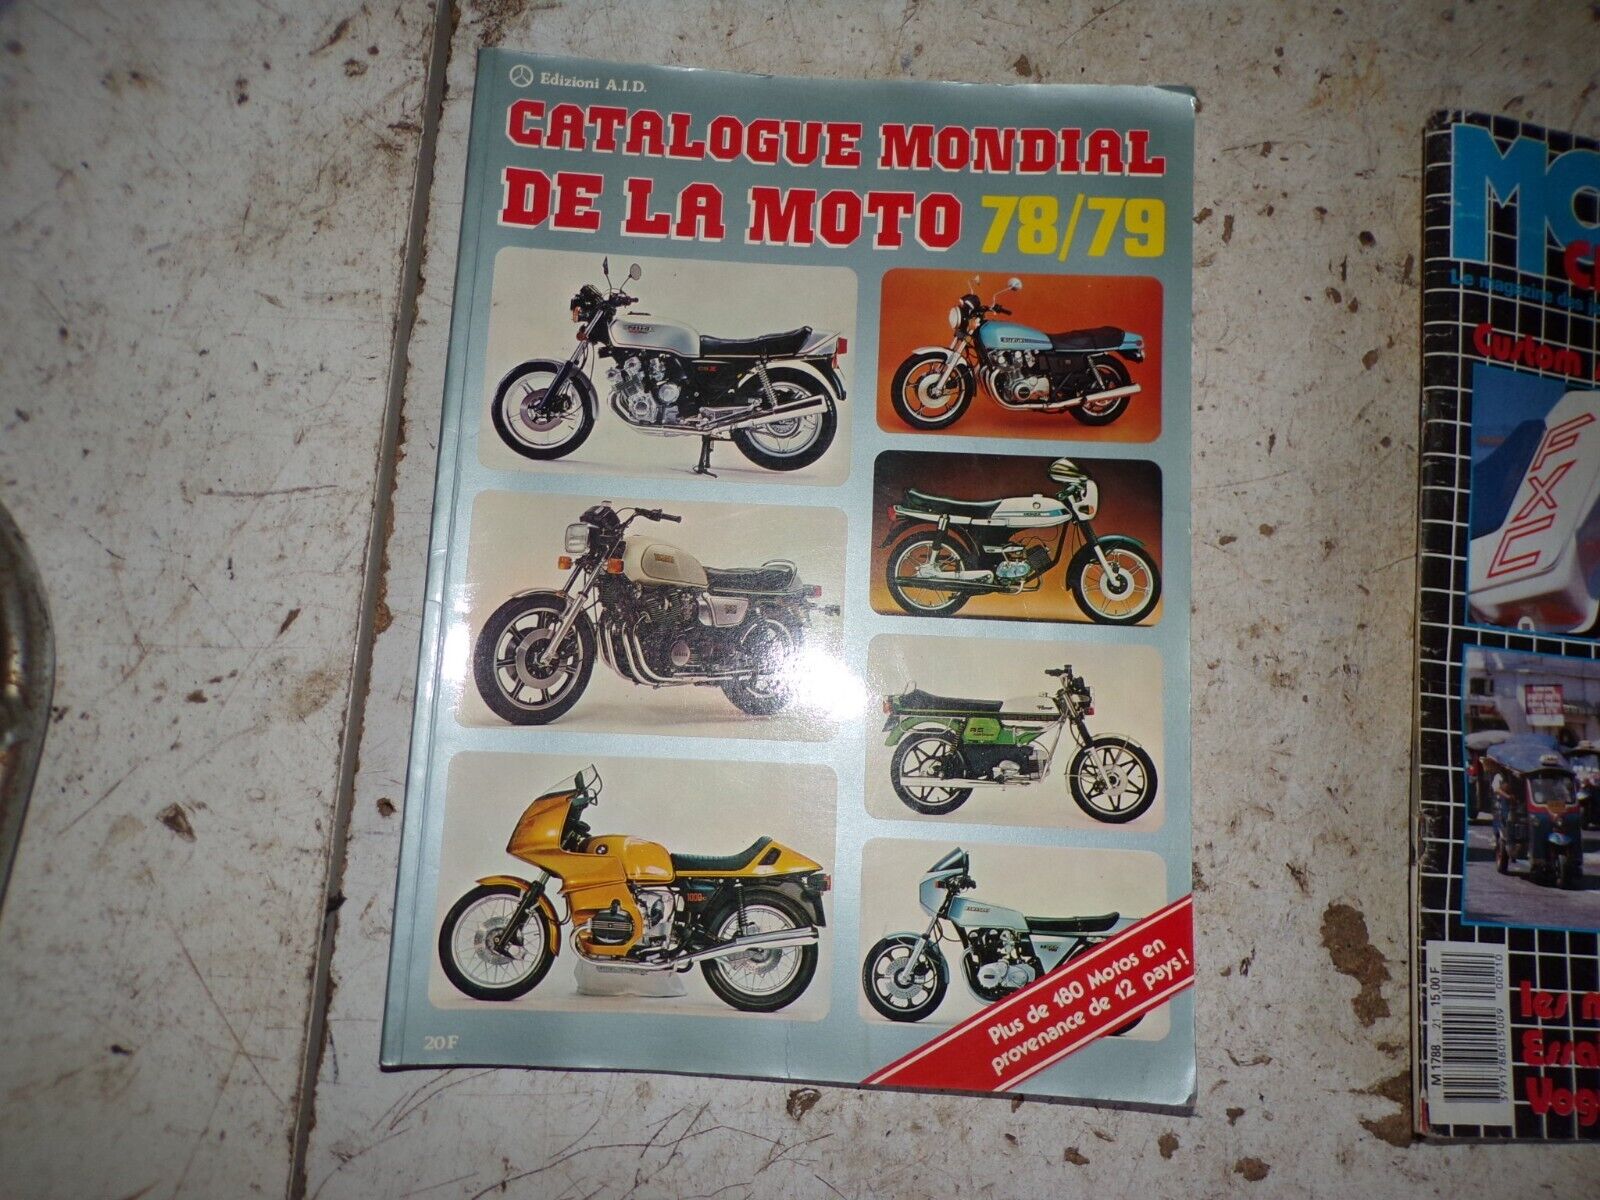 catalogue mondial de la moto 78/79  4424 Main Image